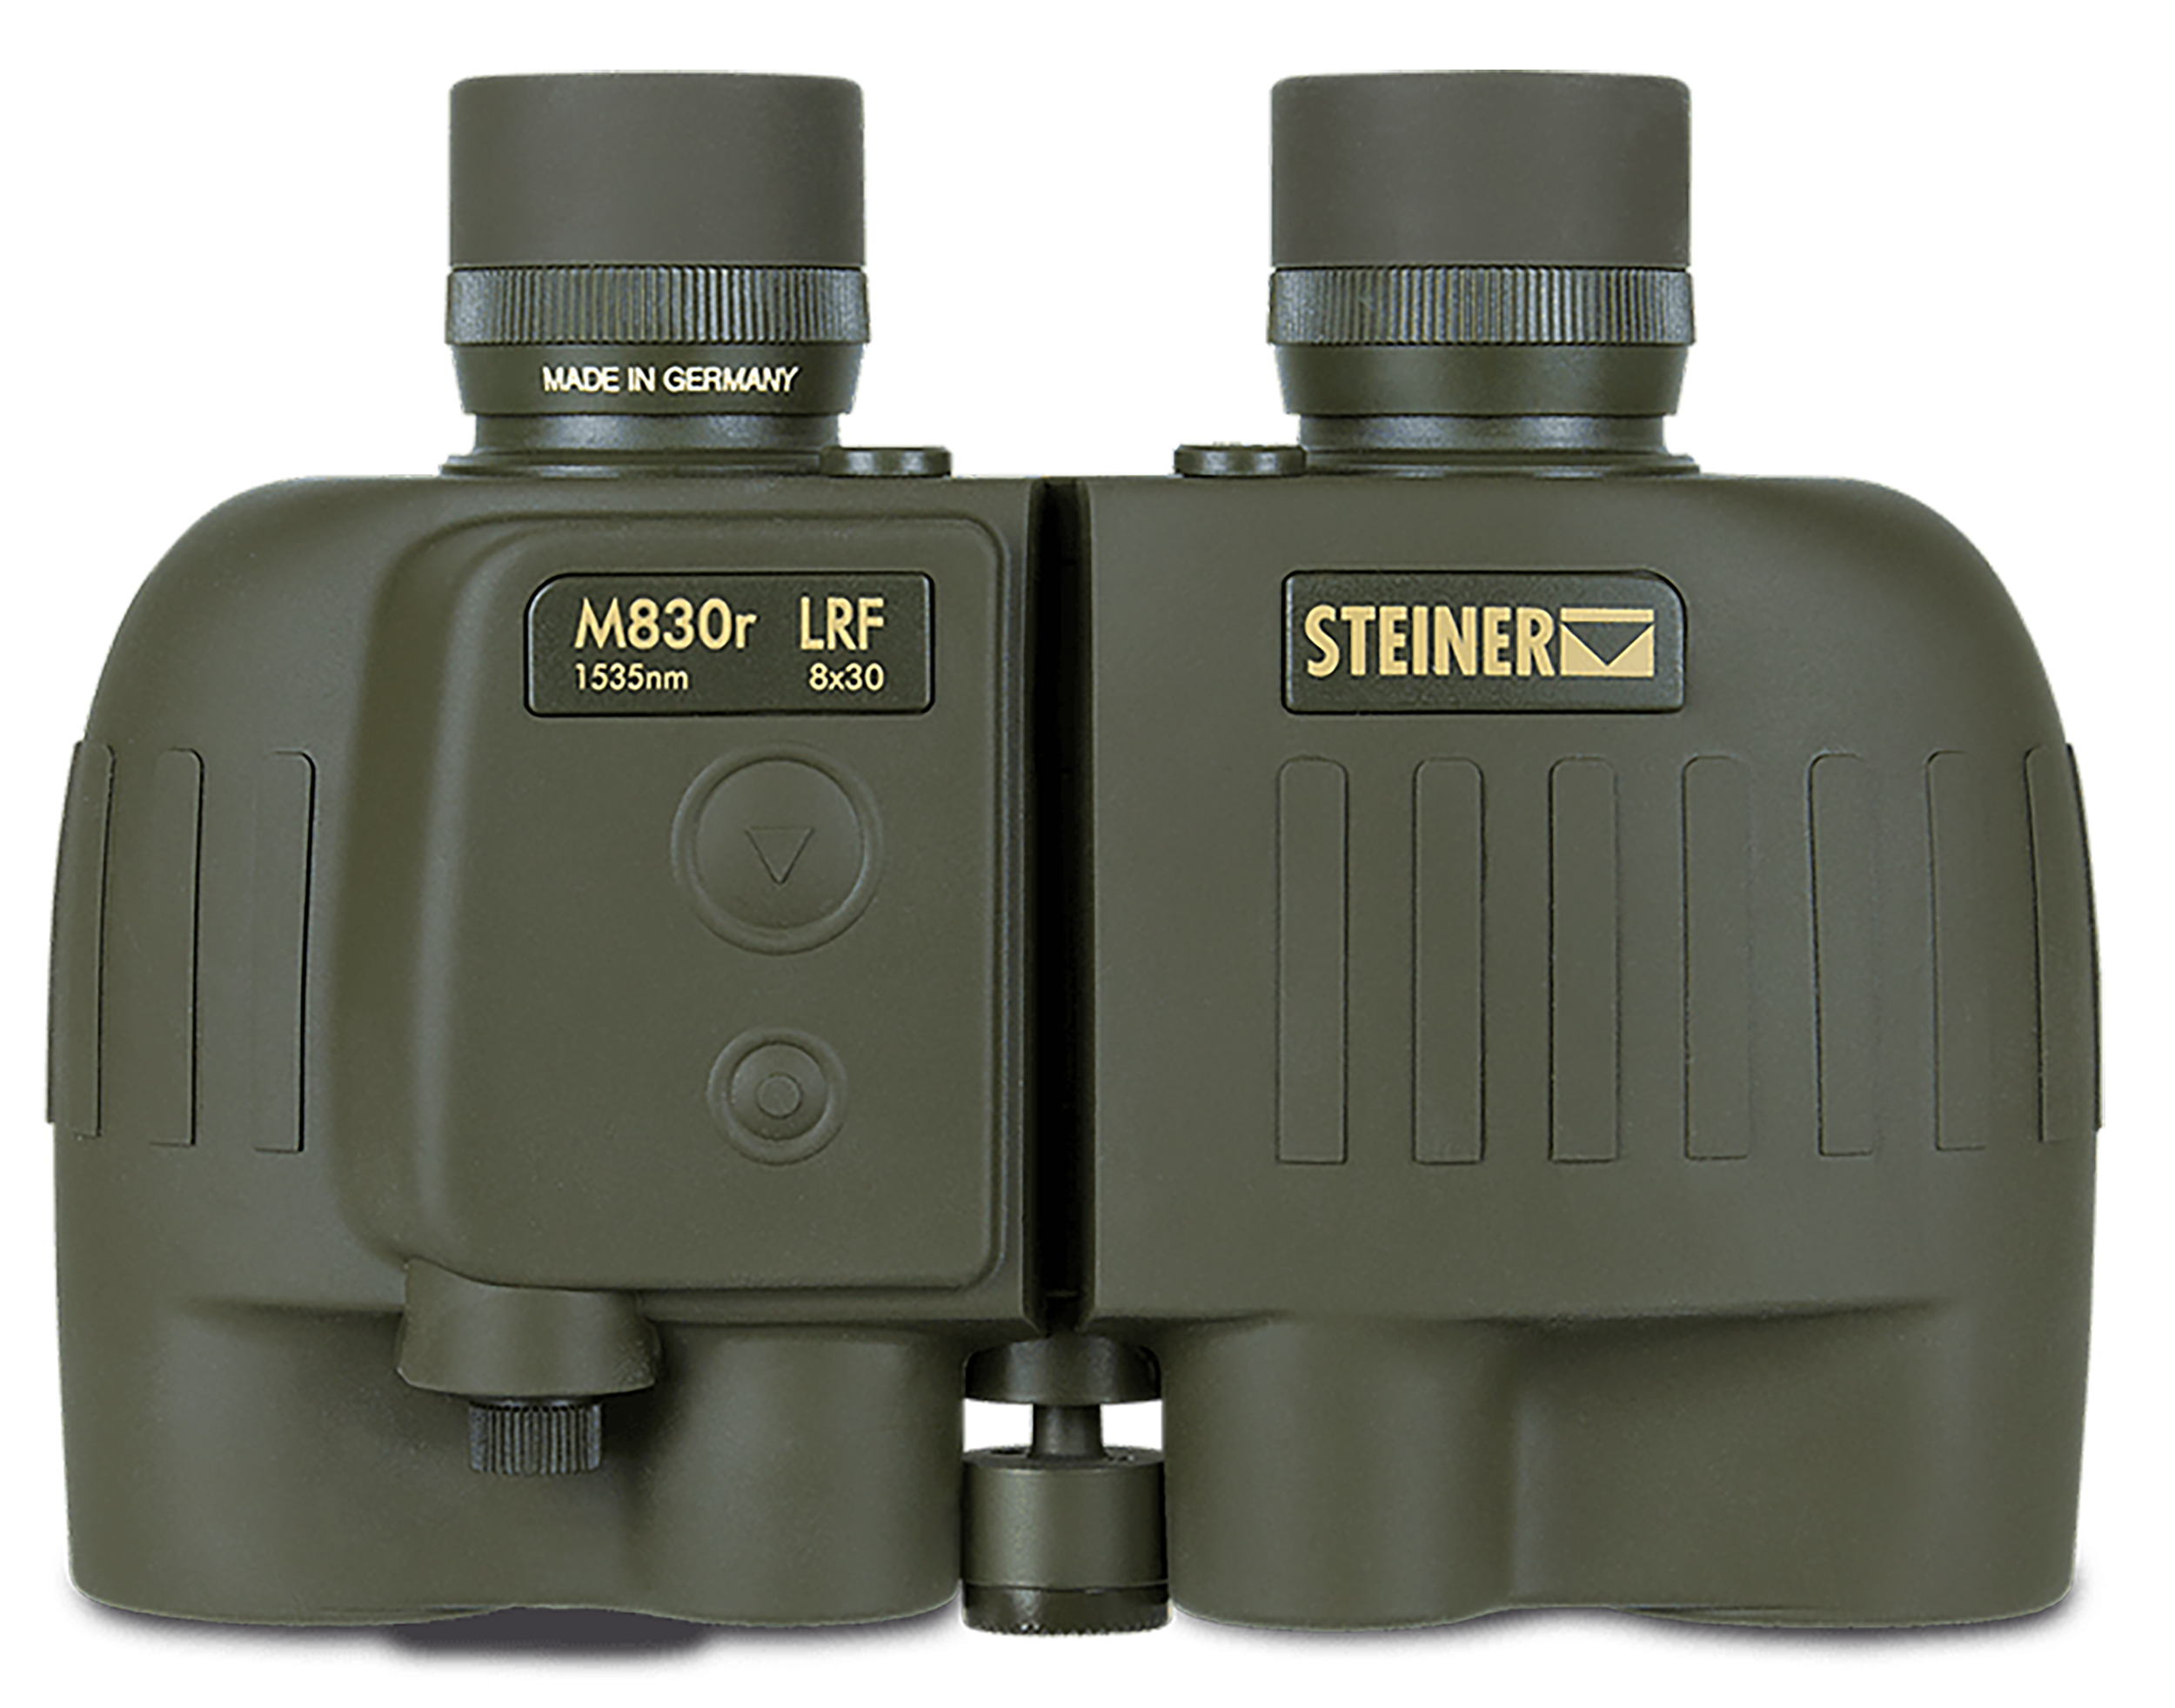 Steiner M830r LRF 1535nm Military Binoculars